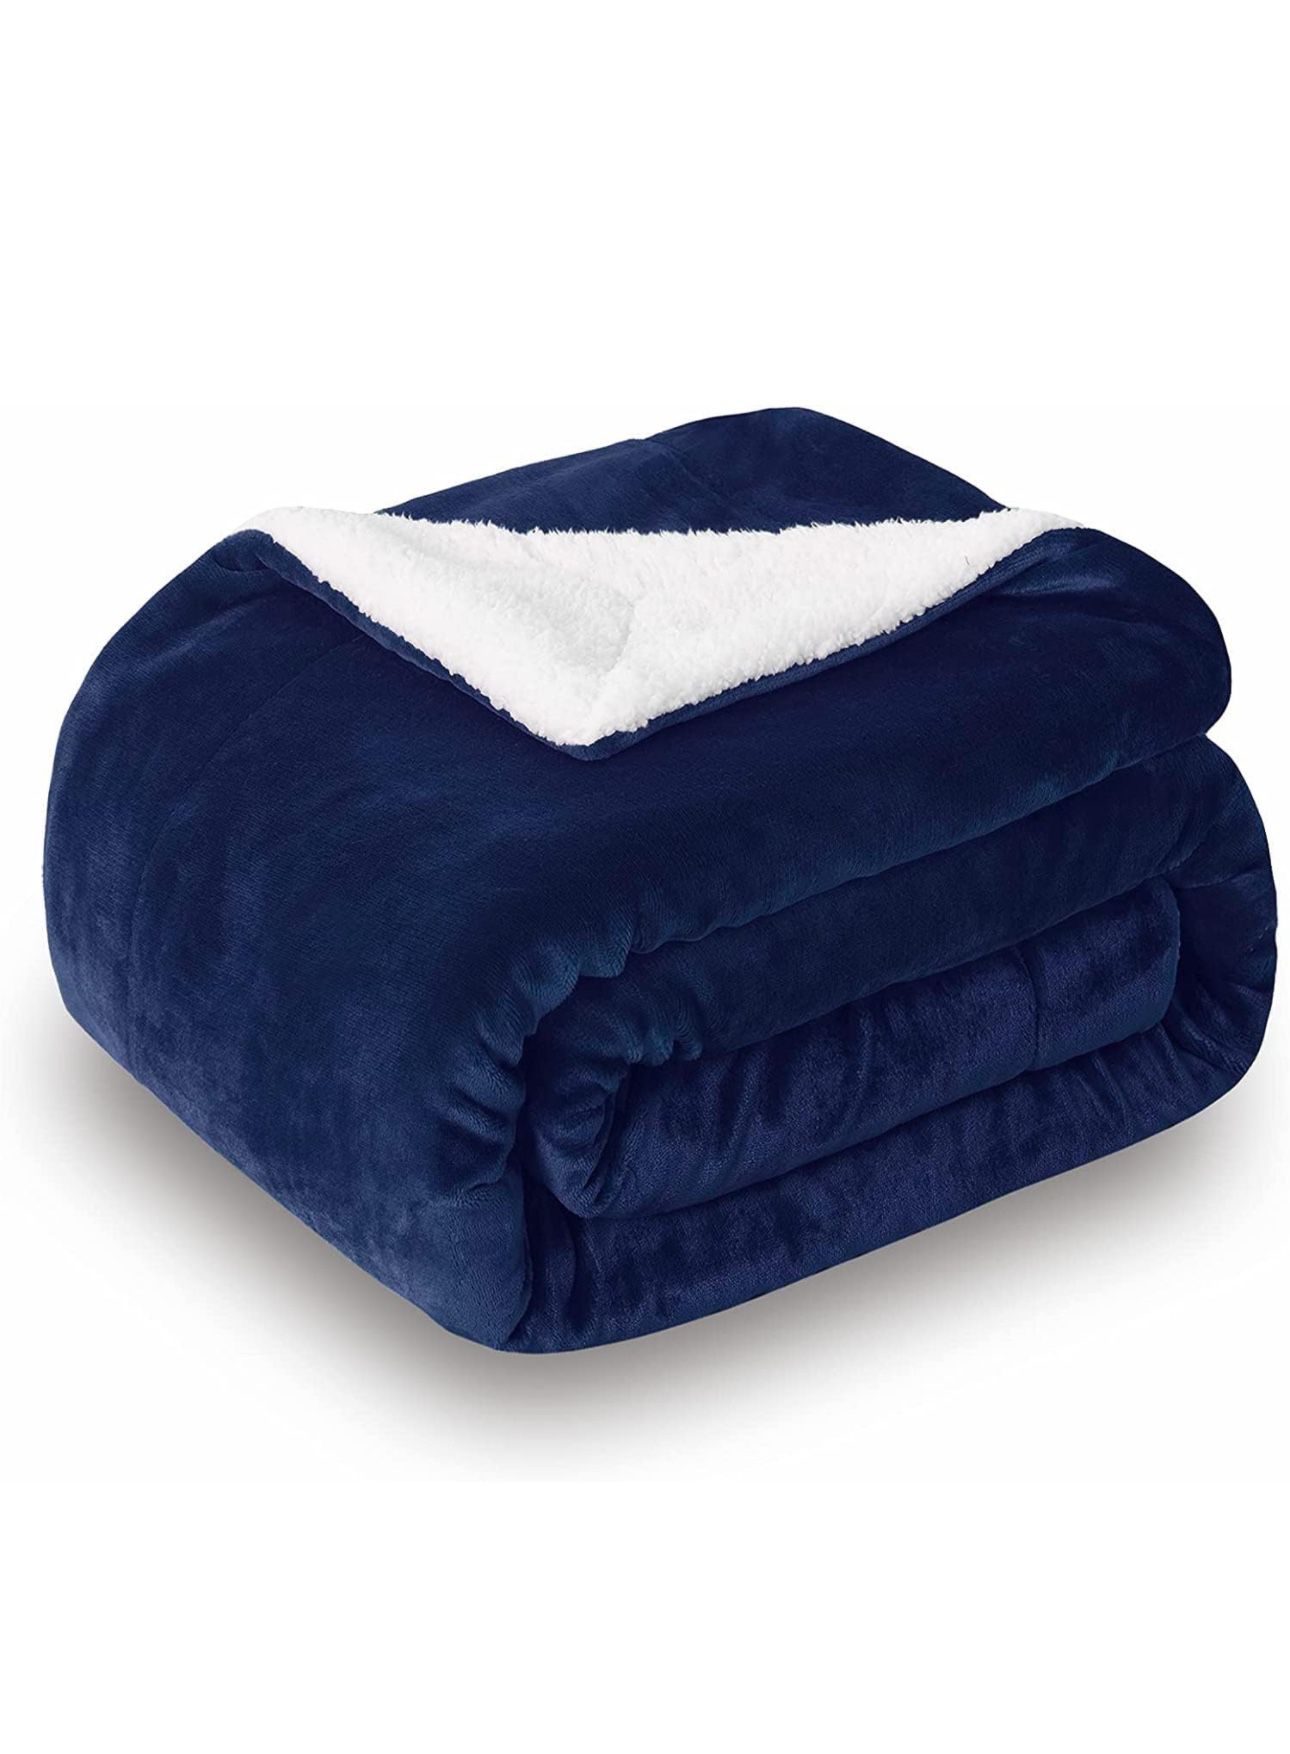 SOCHOW Sherpa Fleece Throw Blanket, Double-Sided Super Soft Luxurious Plush Blanket King Size 90 inchx108 inch, Navy Blue,